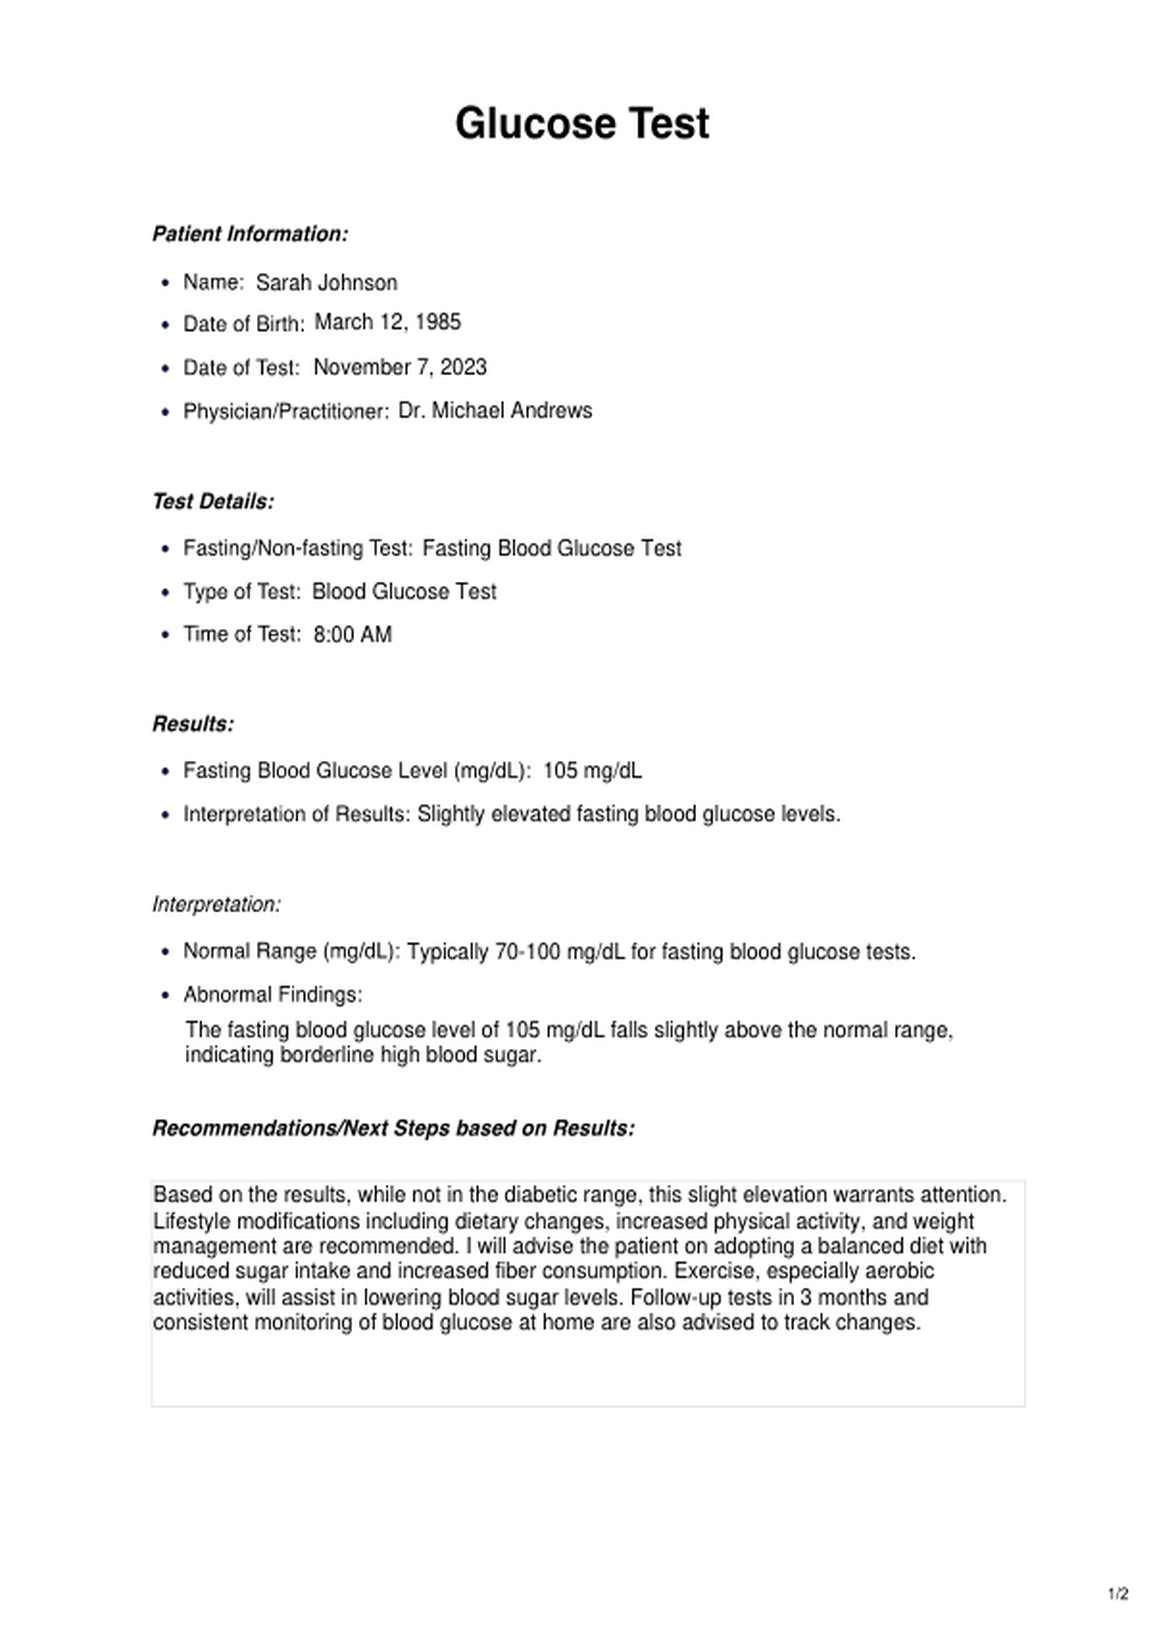 Glucose Test PDF Example